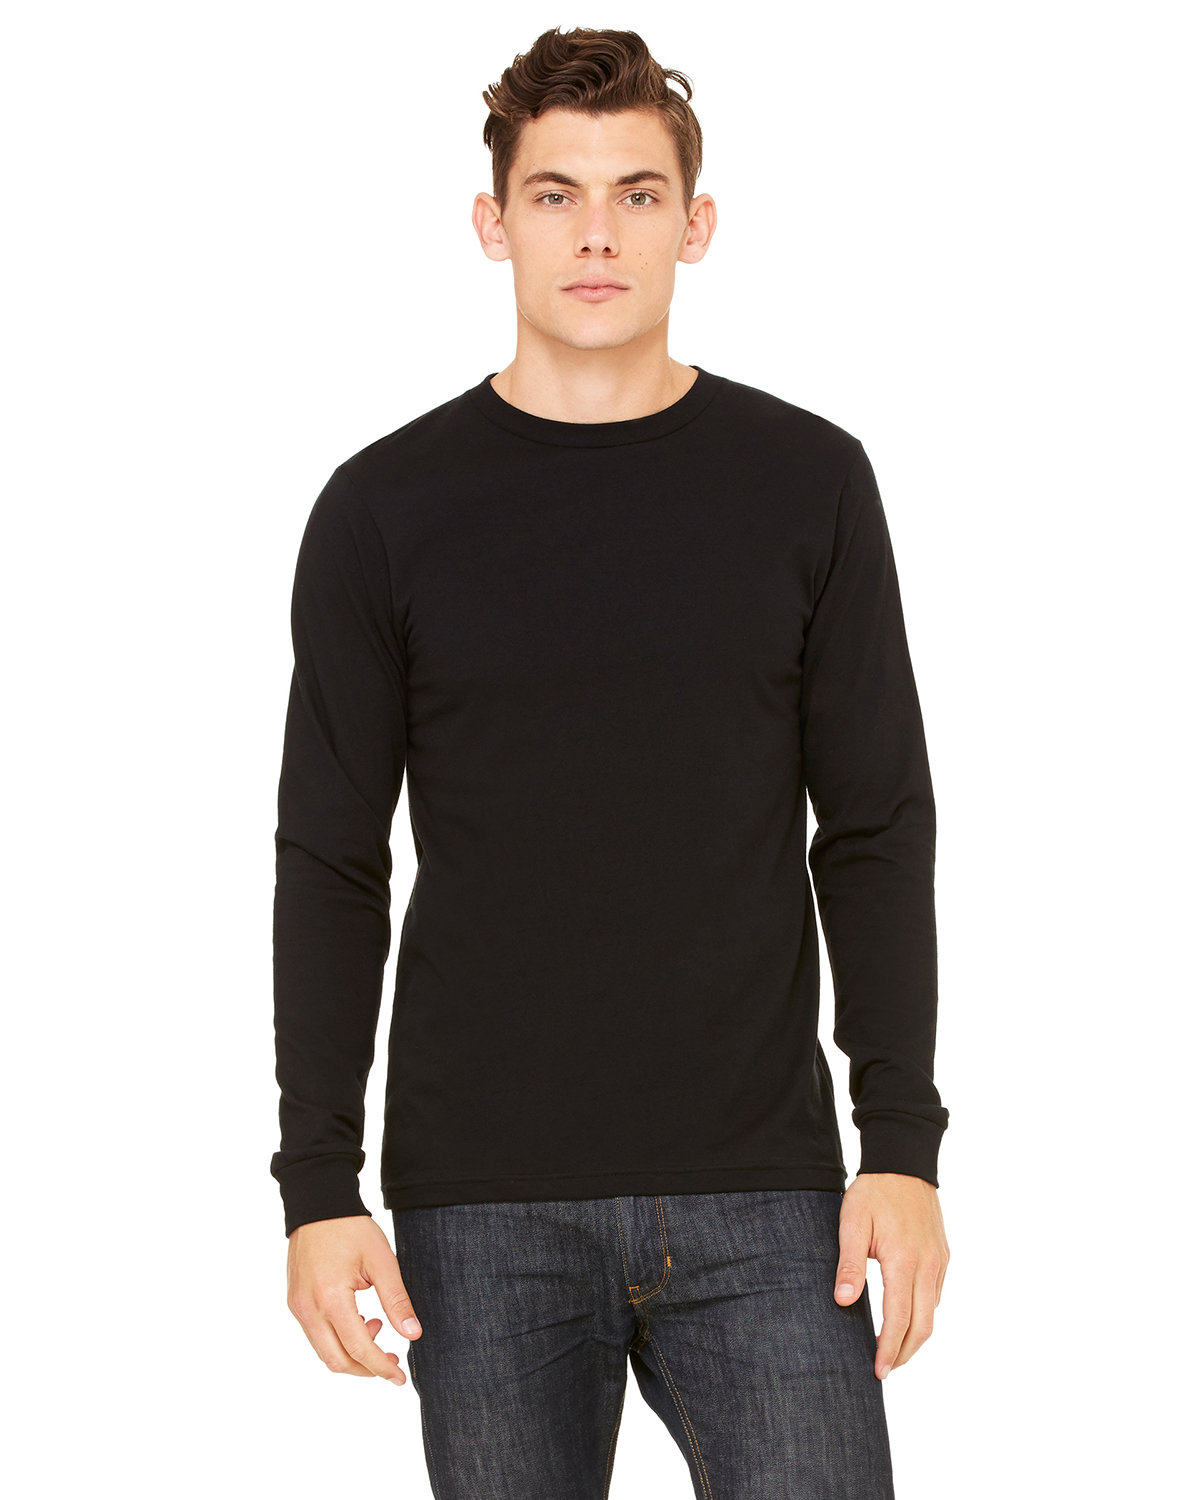 Men's Thermal Long-Sleeve T-Shirt